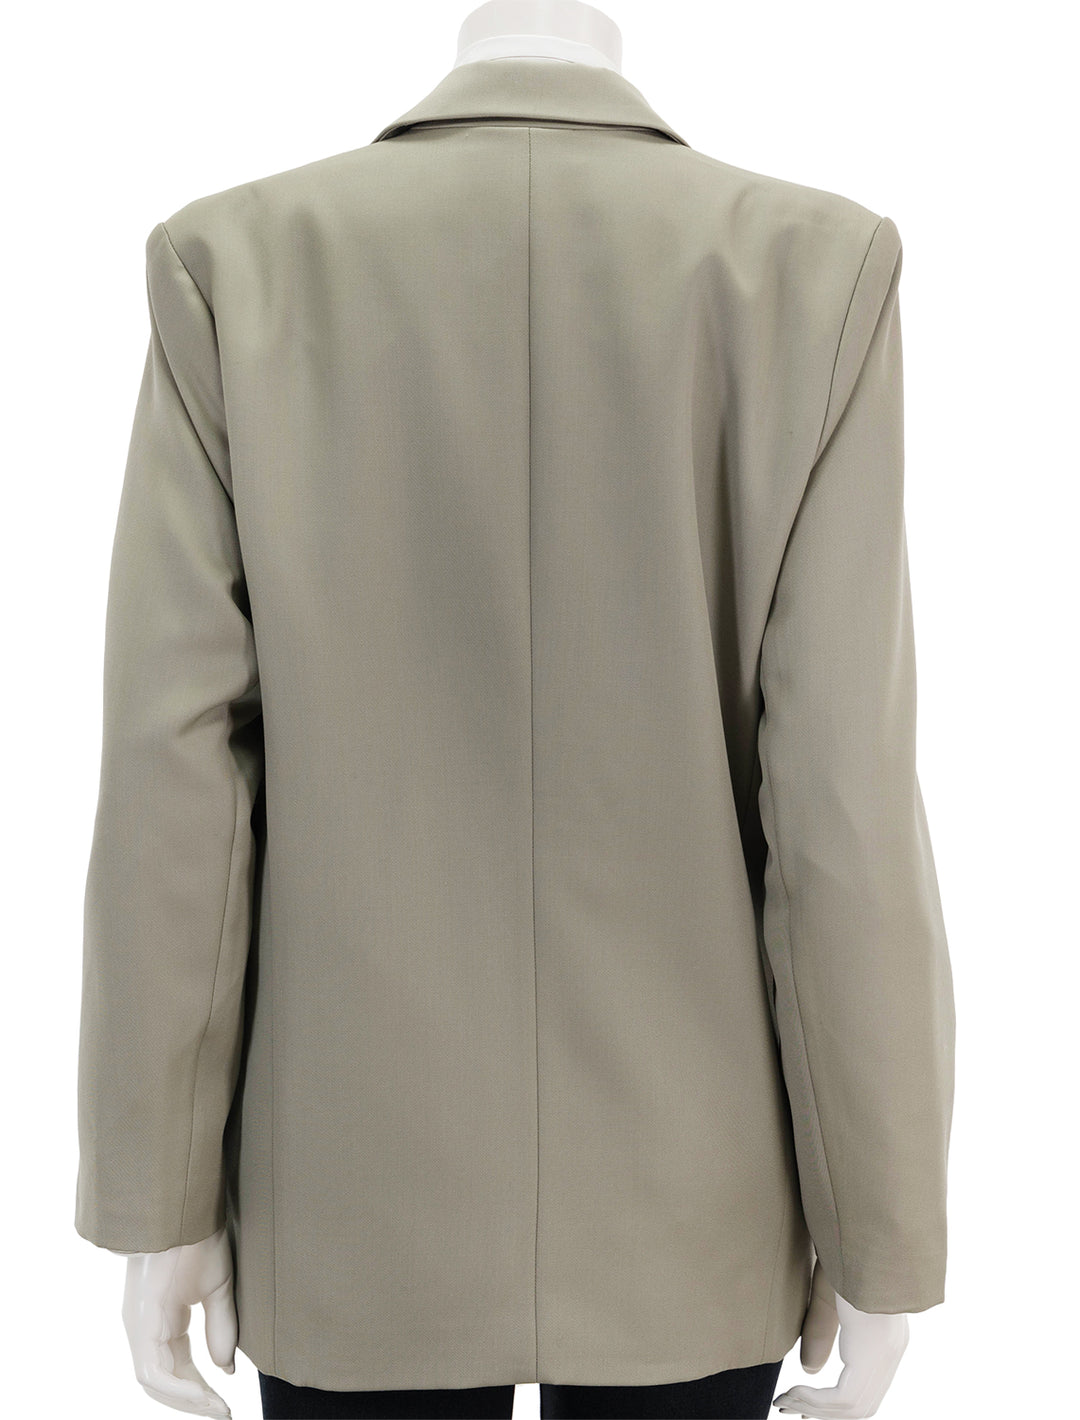 Back view of Anine Bing's quinn blazer in green khaki.